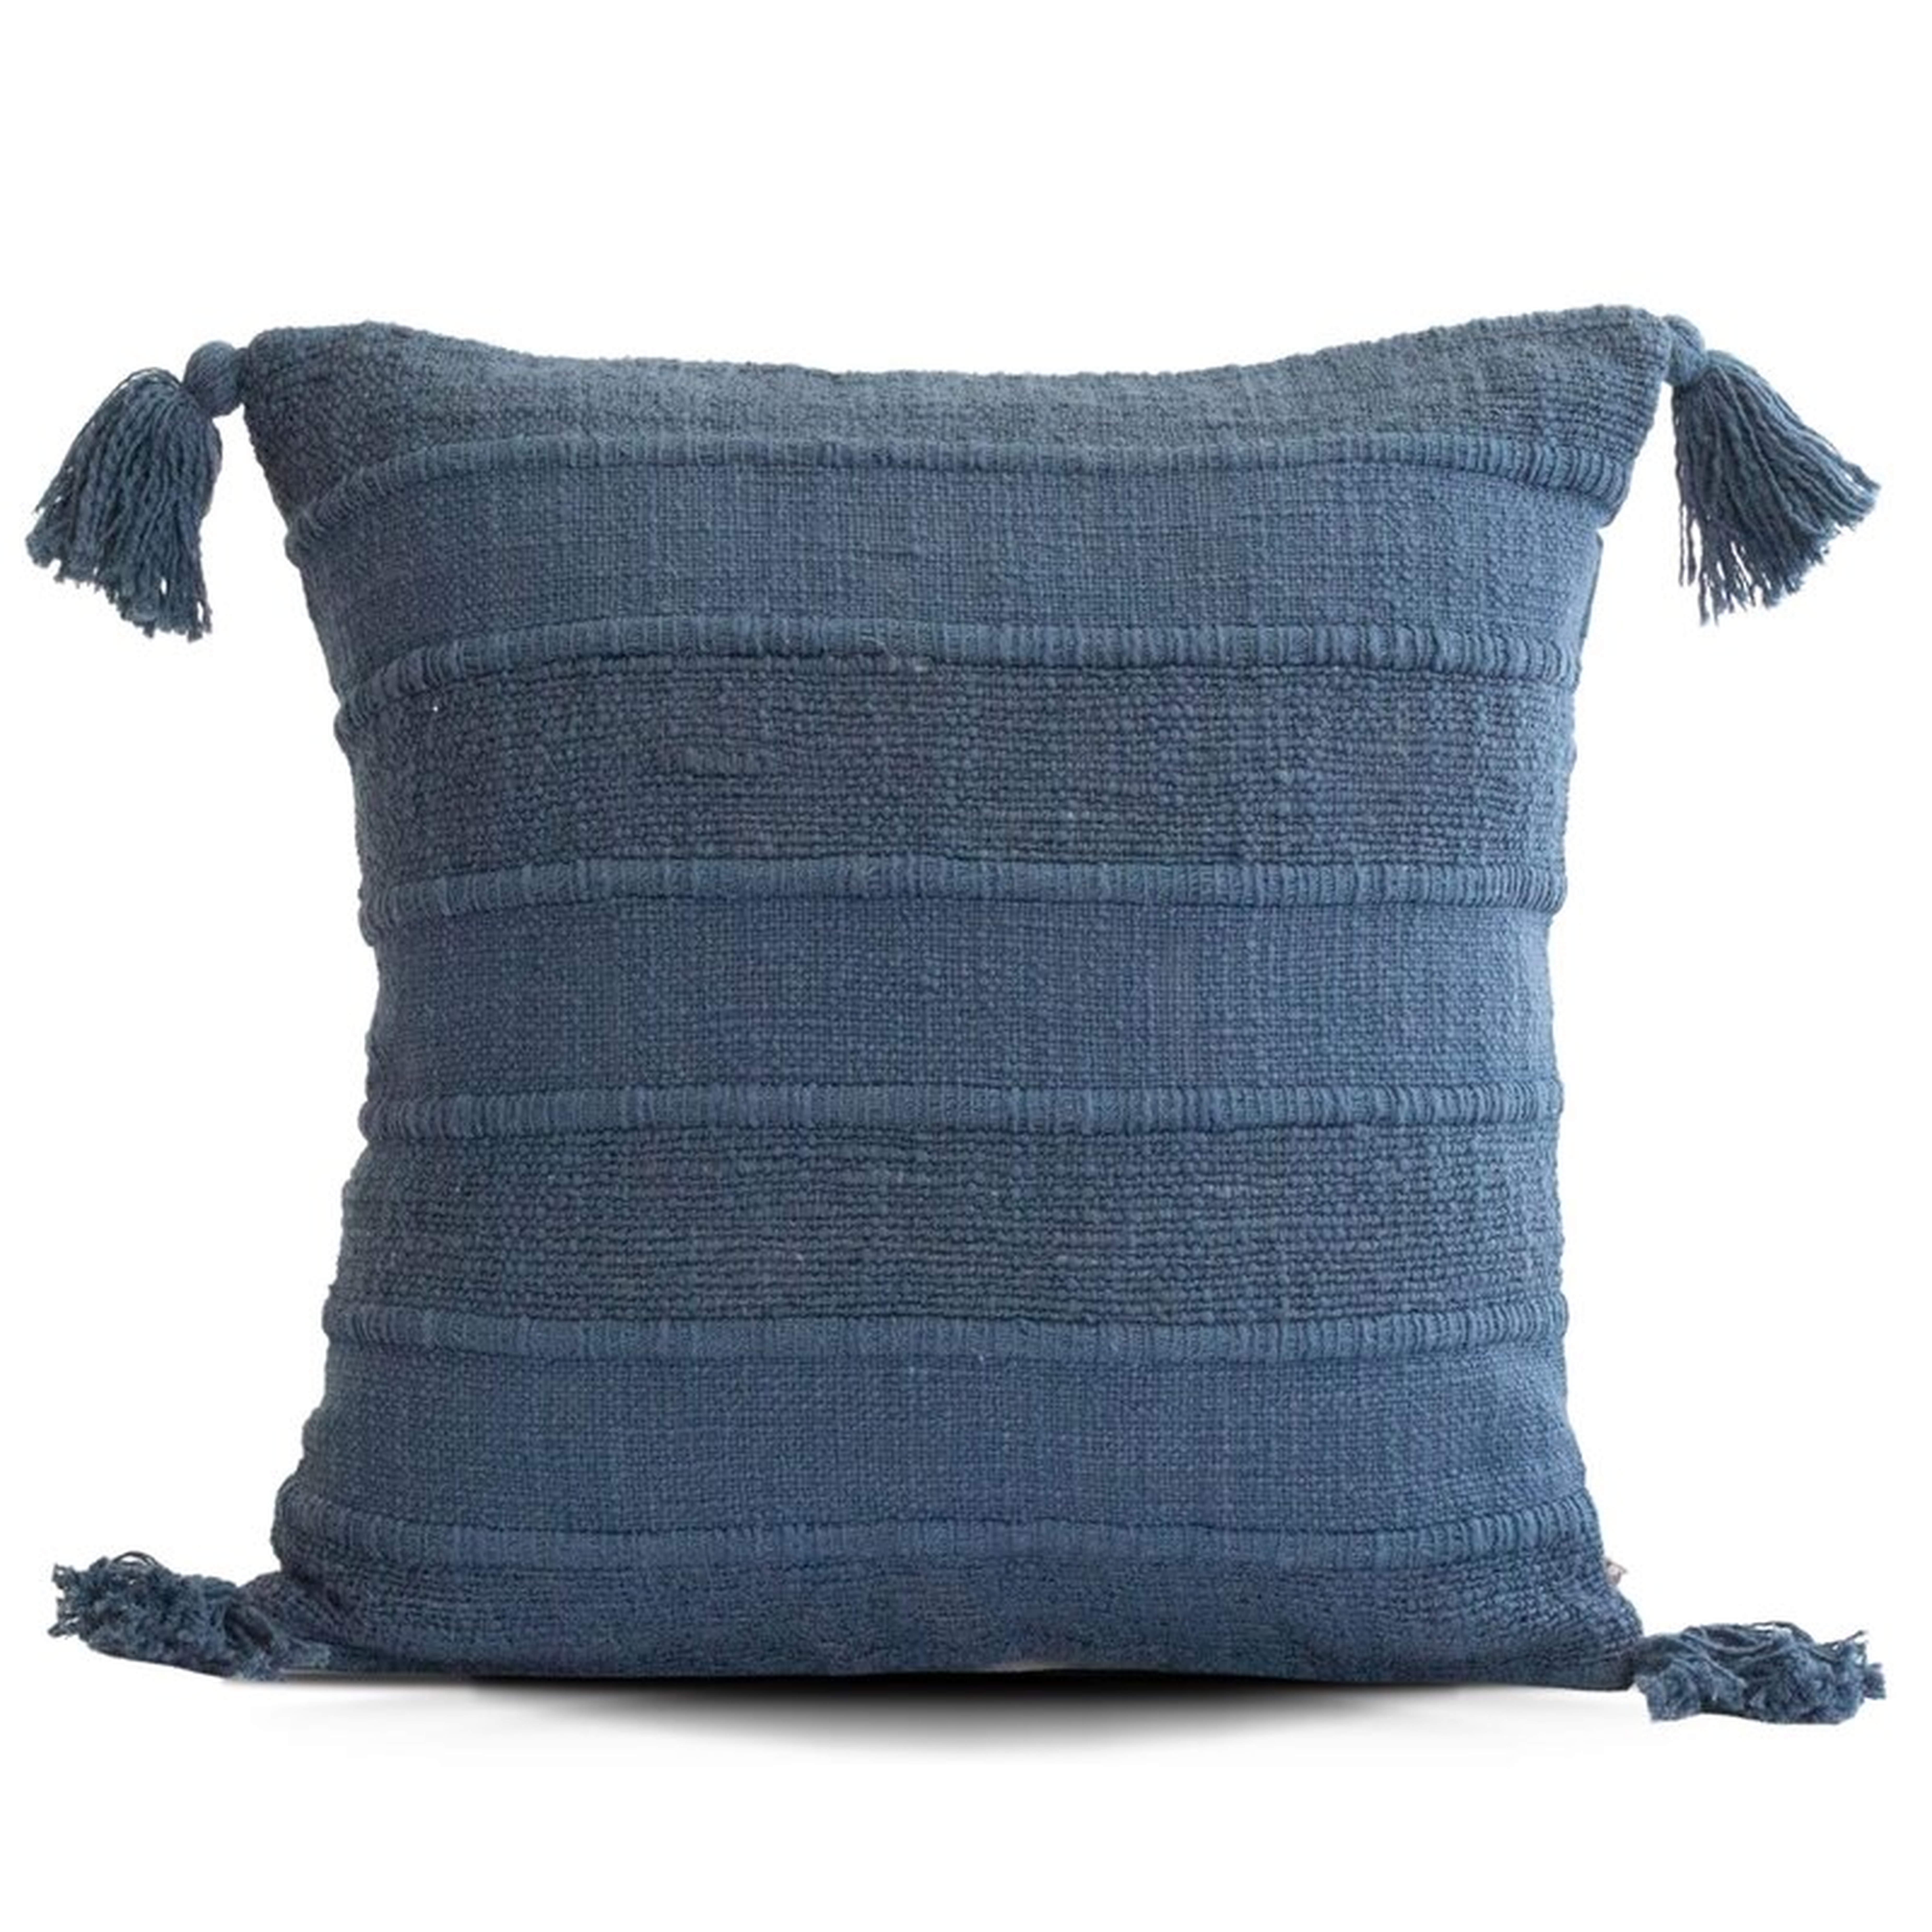 Tulon Square Cotton Pillow Cover - Wayfair